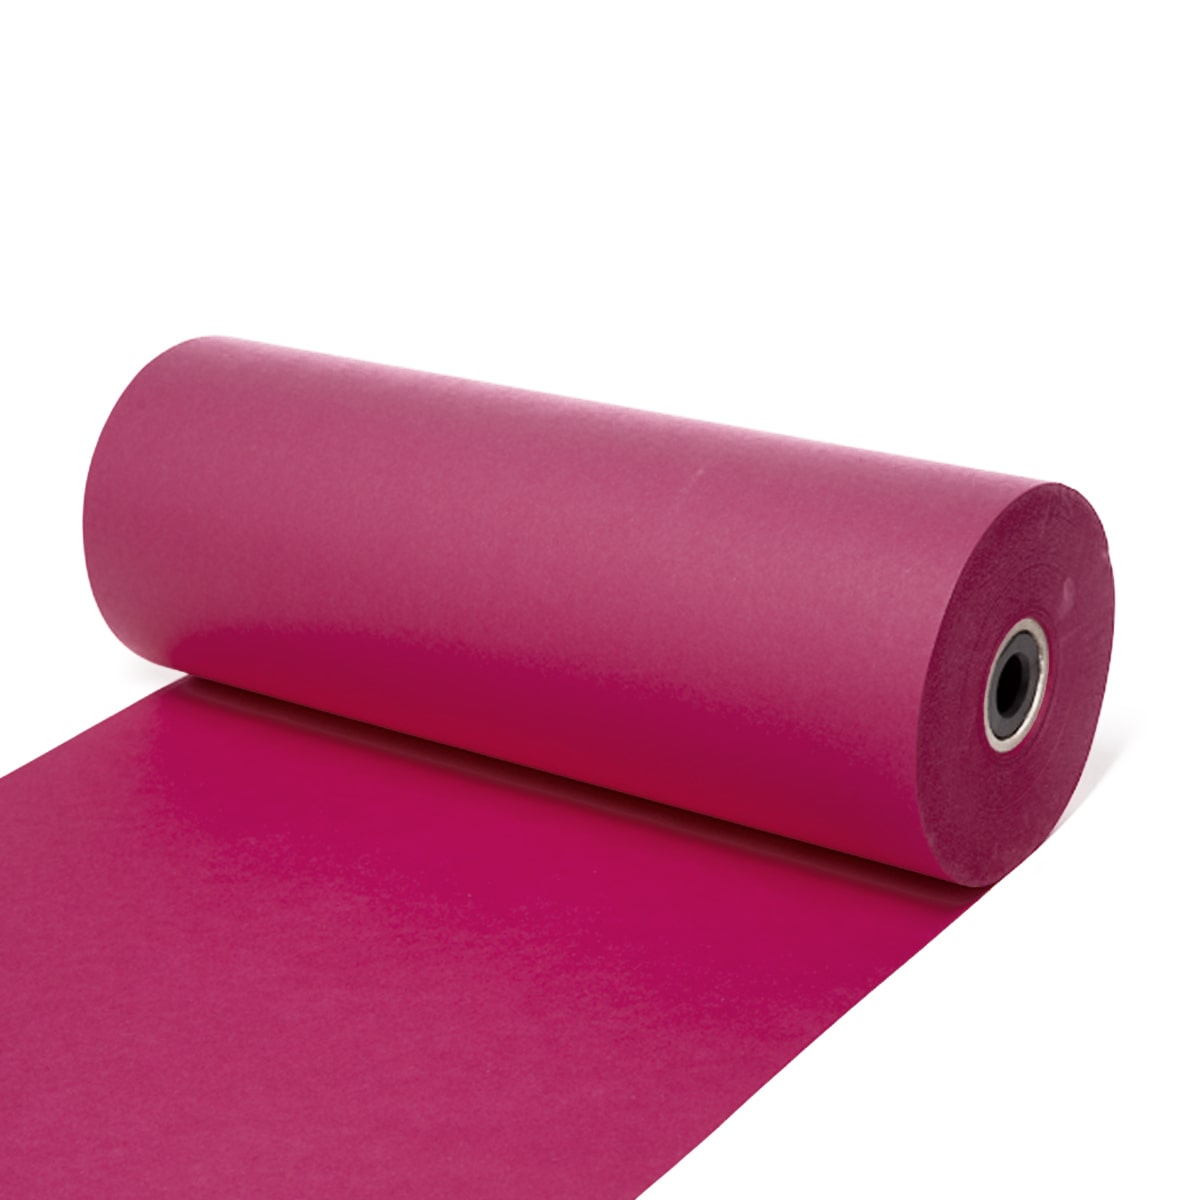 Seidenpapier Pink, 50 / 75 cm breit, ca. 500 Meter / Rolle